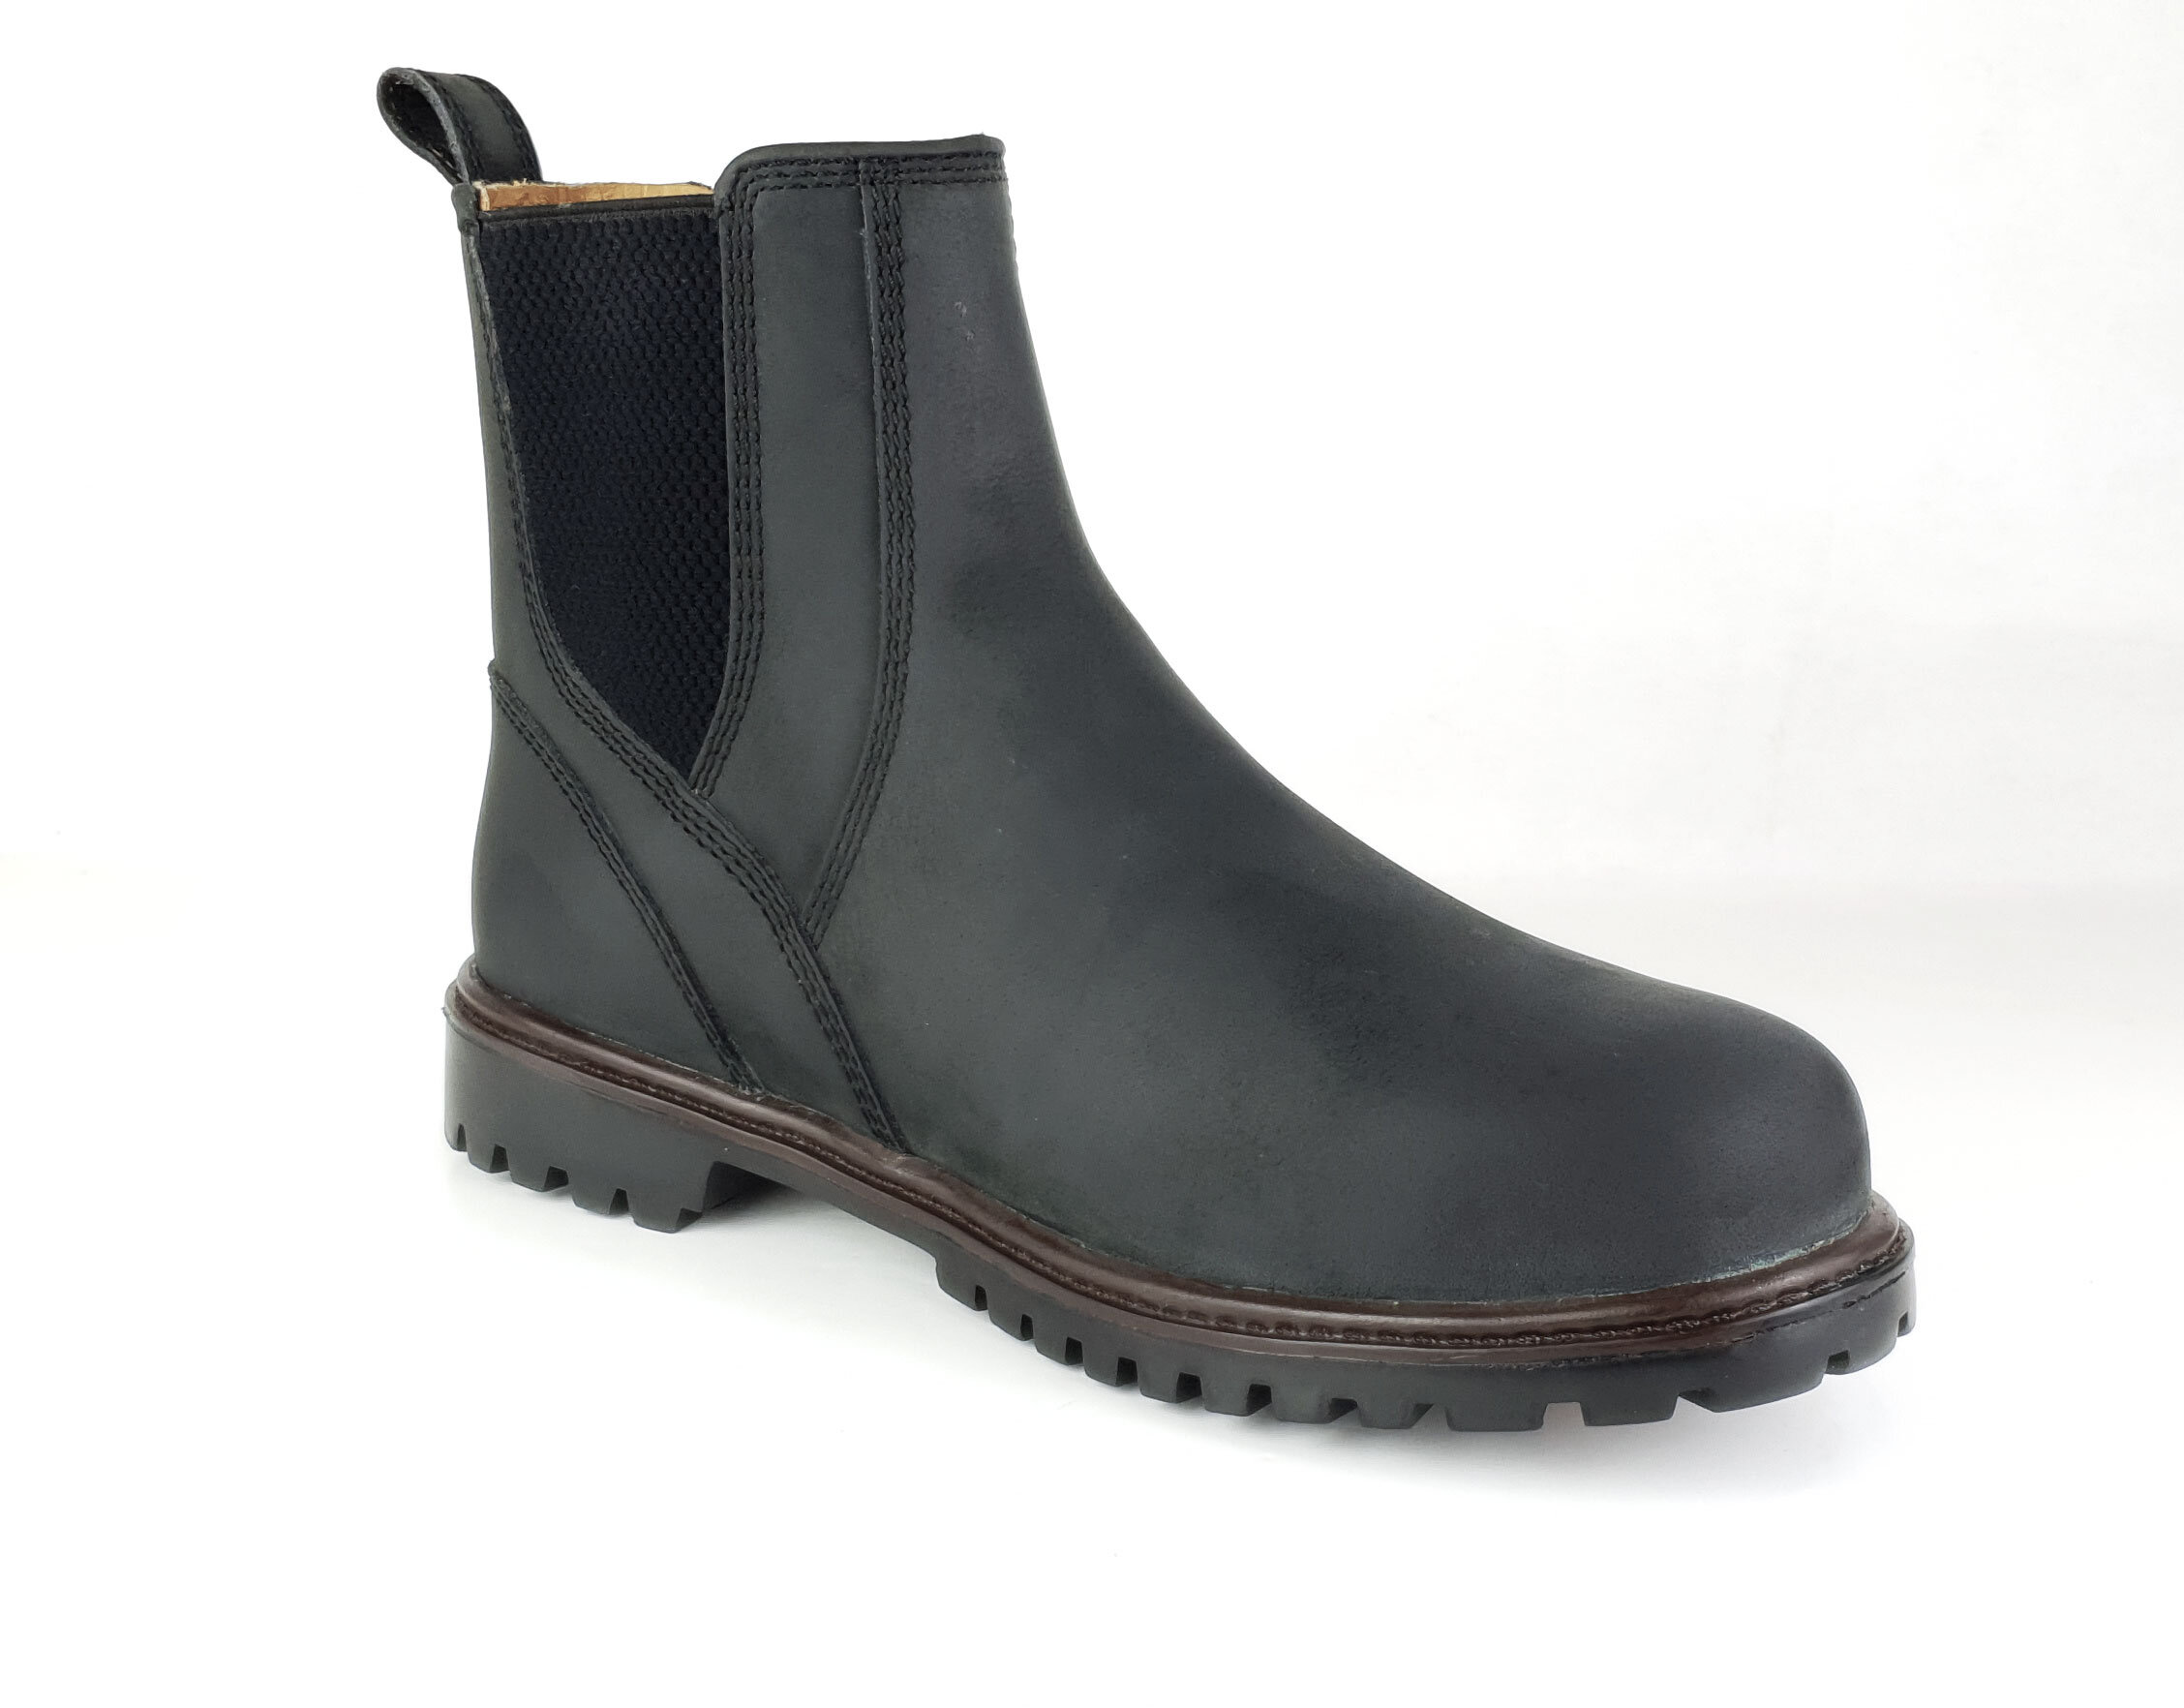 Samson 7047 S3 SRC Size 6 Black Leather Steel Toe Chelsea Dealer Safety Boots 